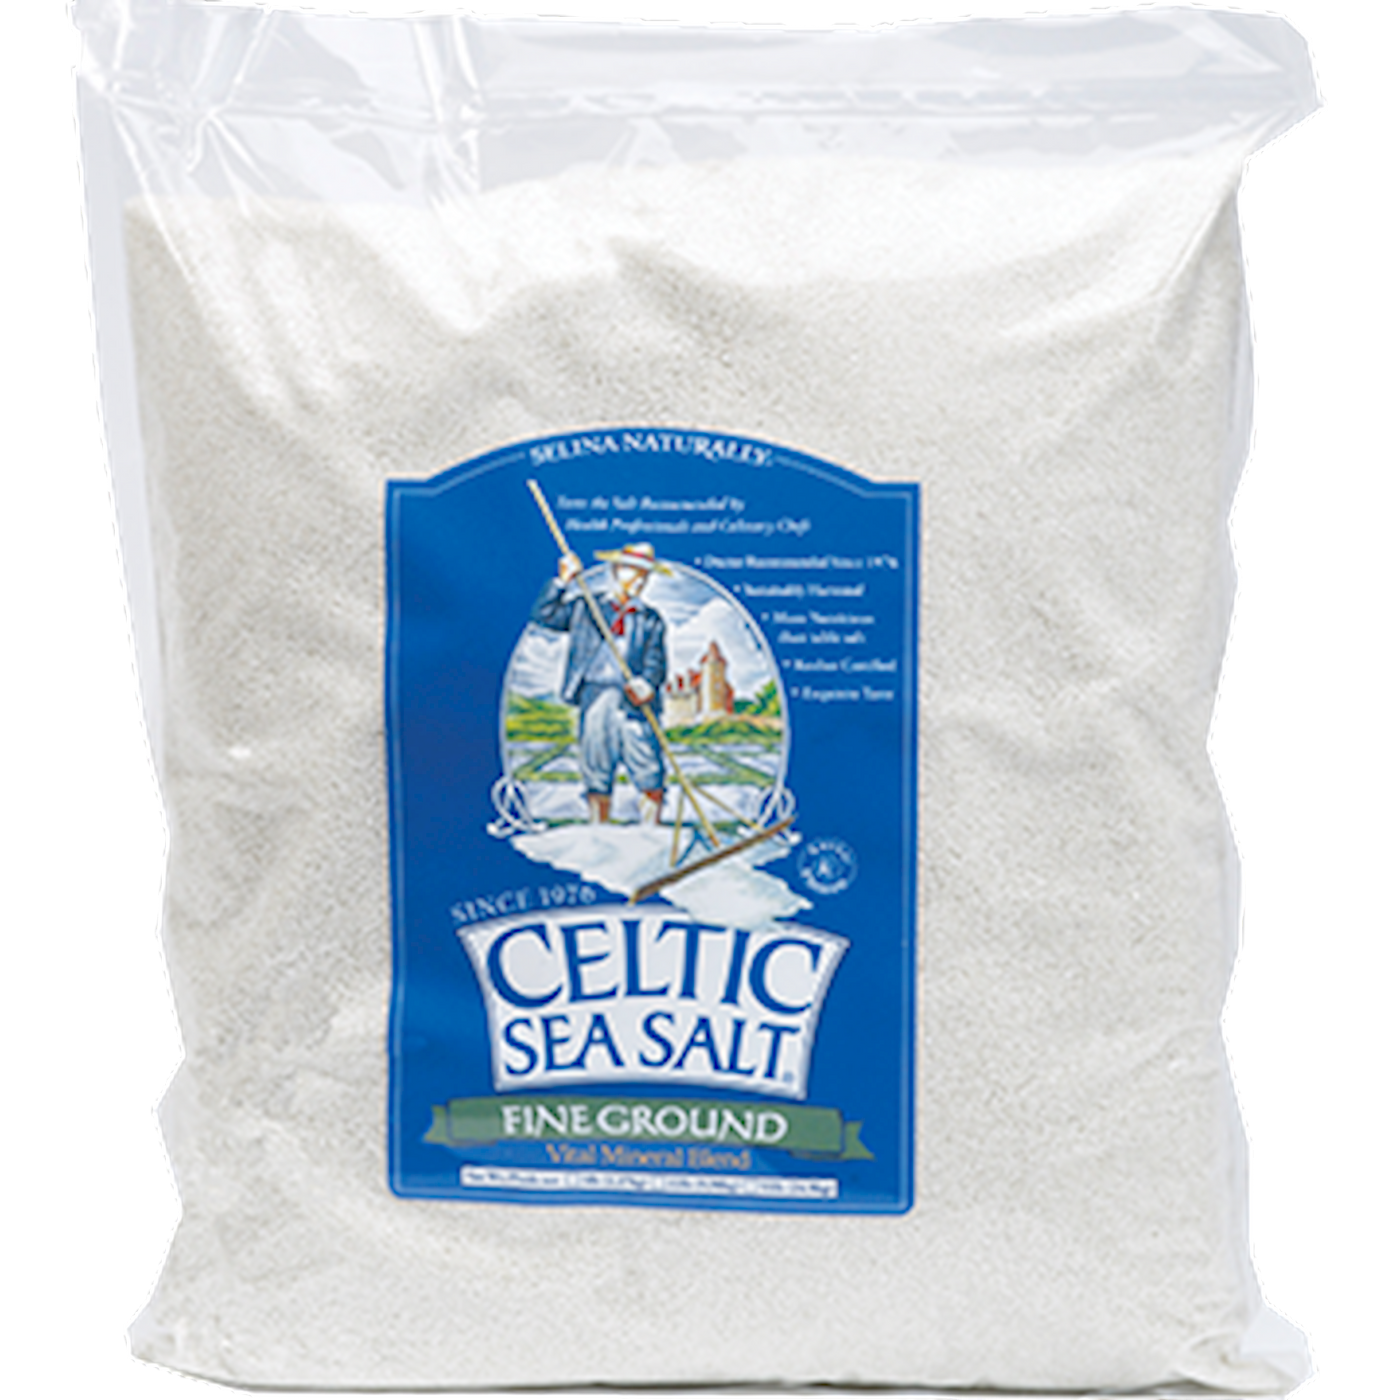 Fine Ground Celtic Sea Salt s Curated Wellness